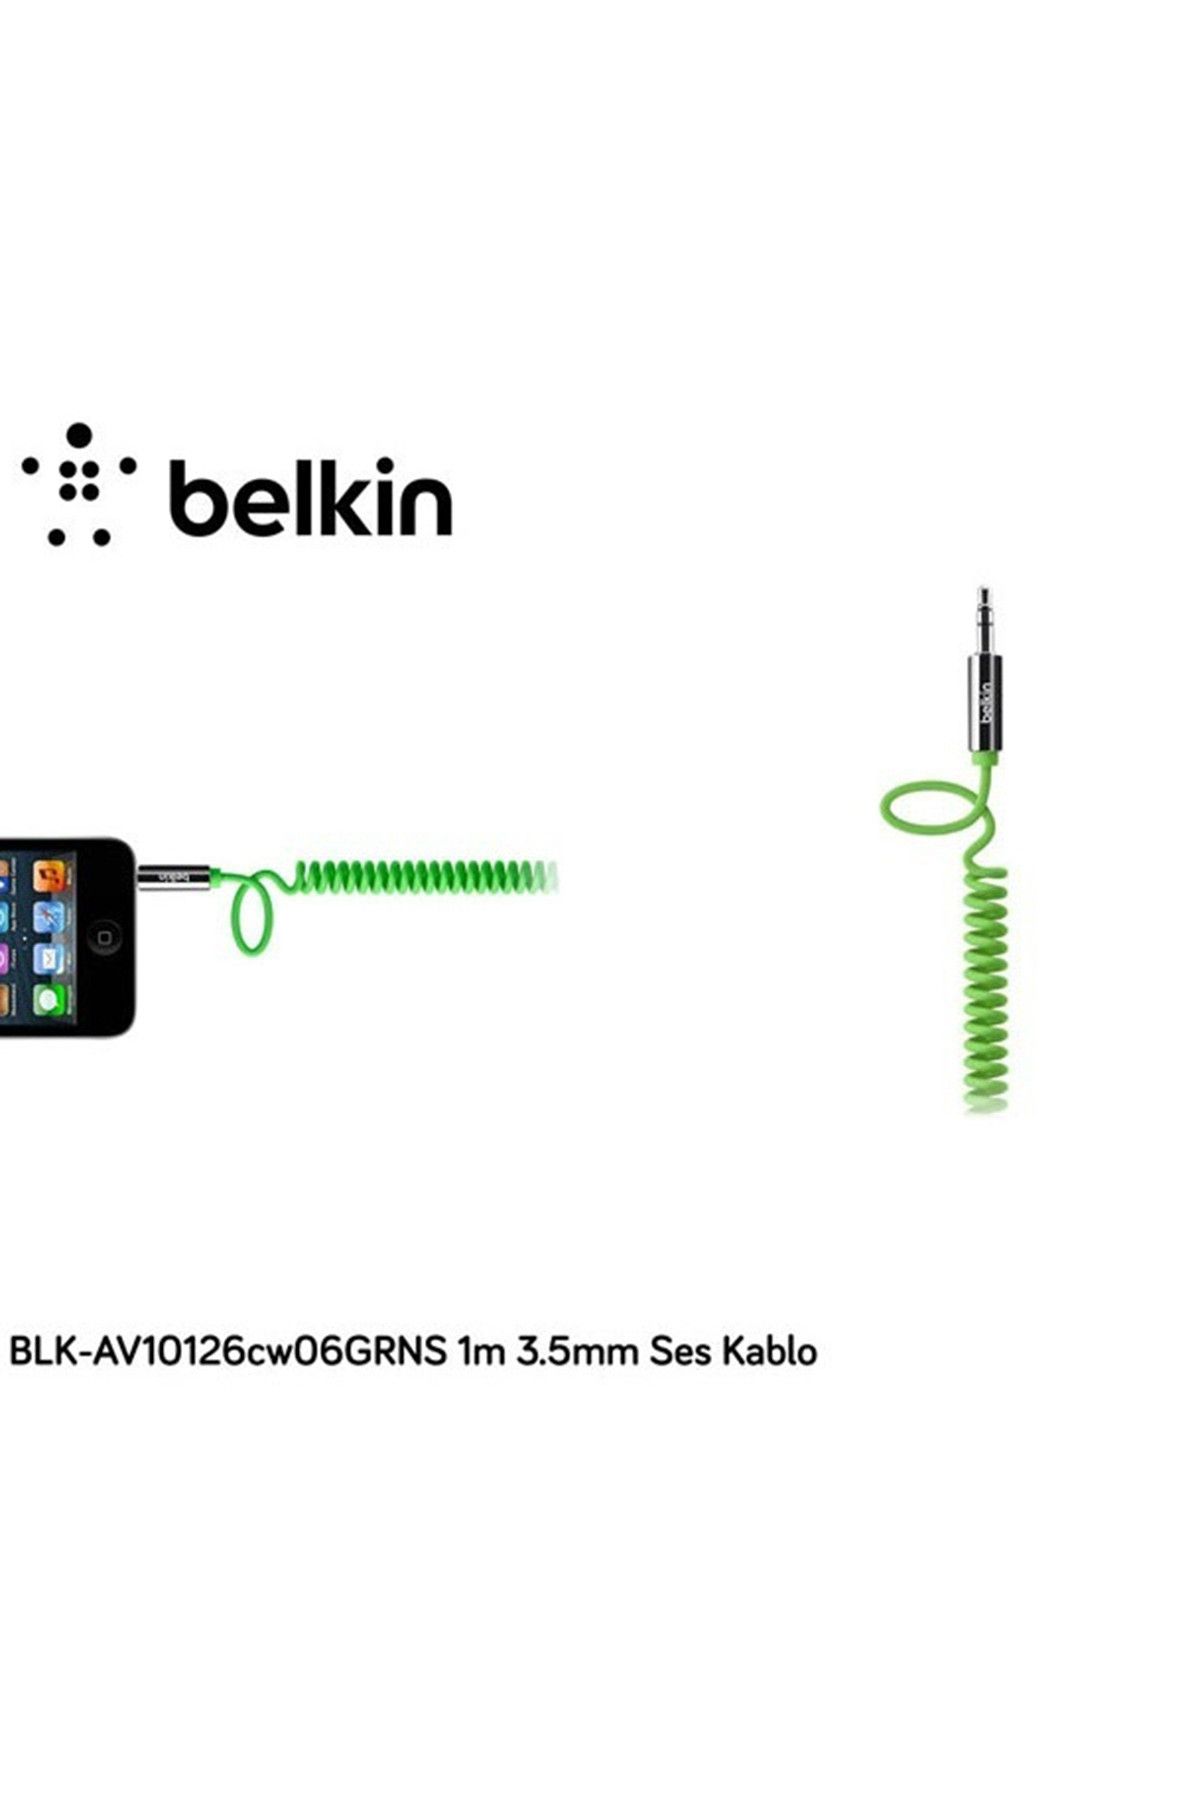 Belkin Blk-av10126cw06grns 1m 3.5mm Ses Kablo